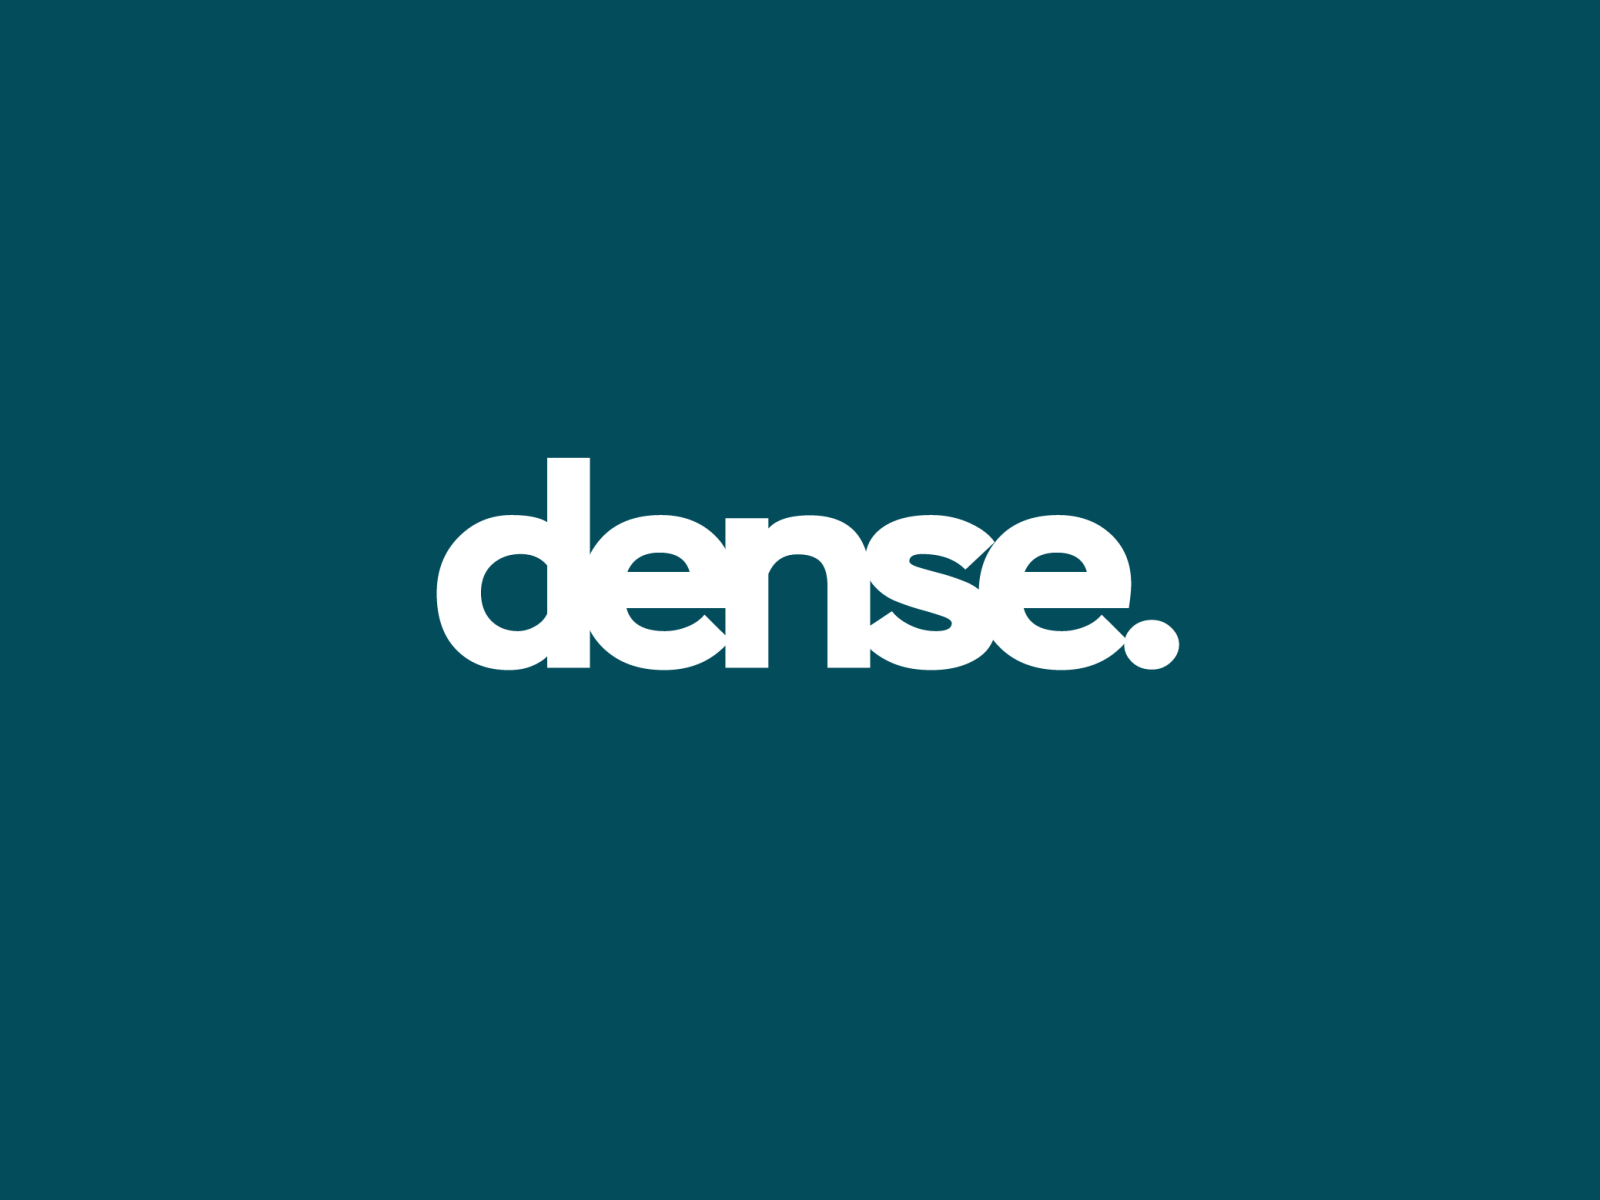 DENSE Logo by Gevorg Hayrapetian on Dribbble